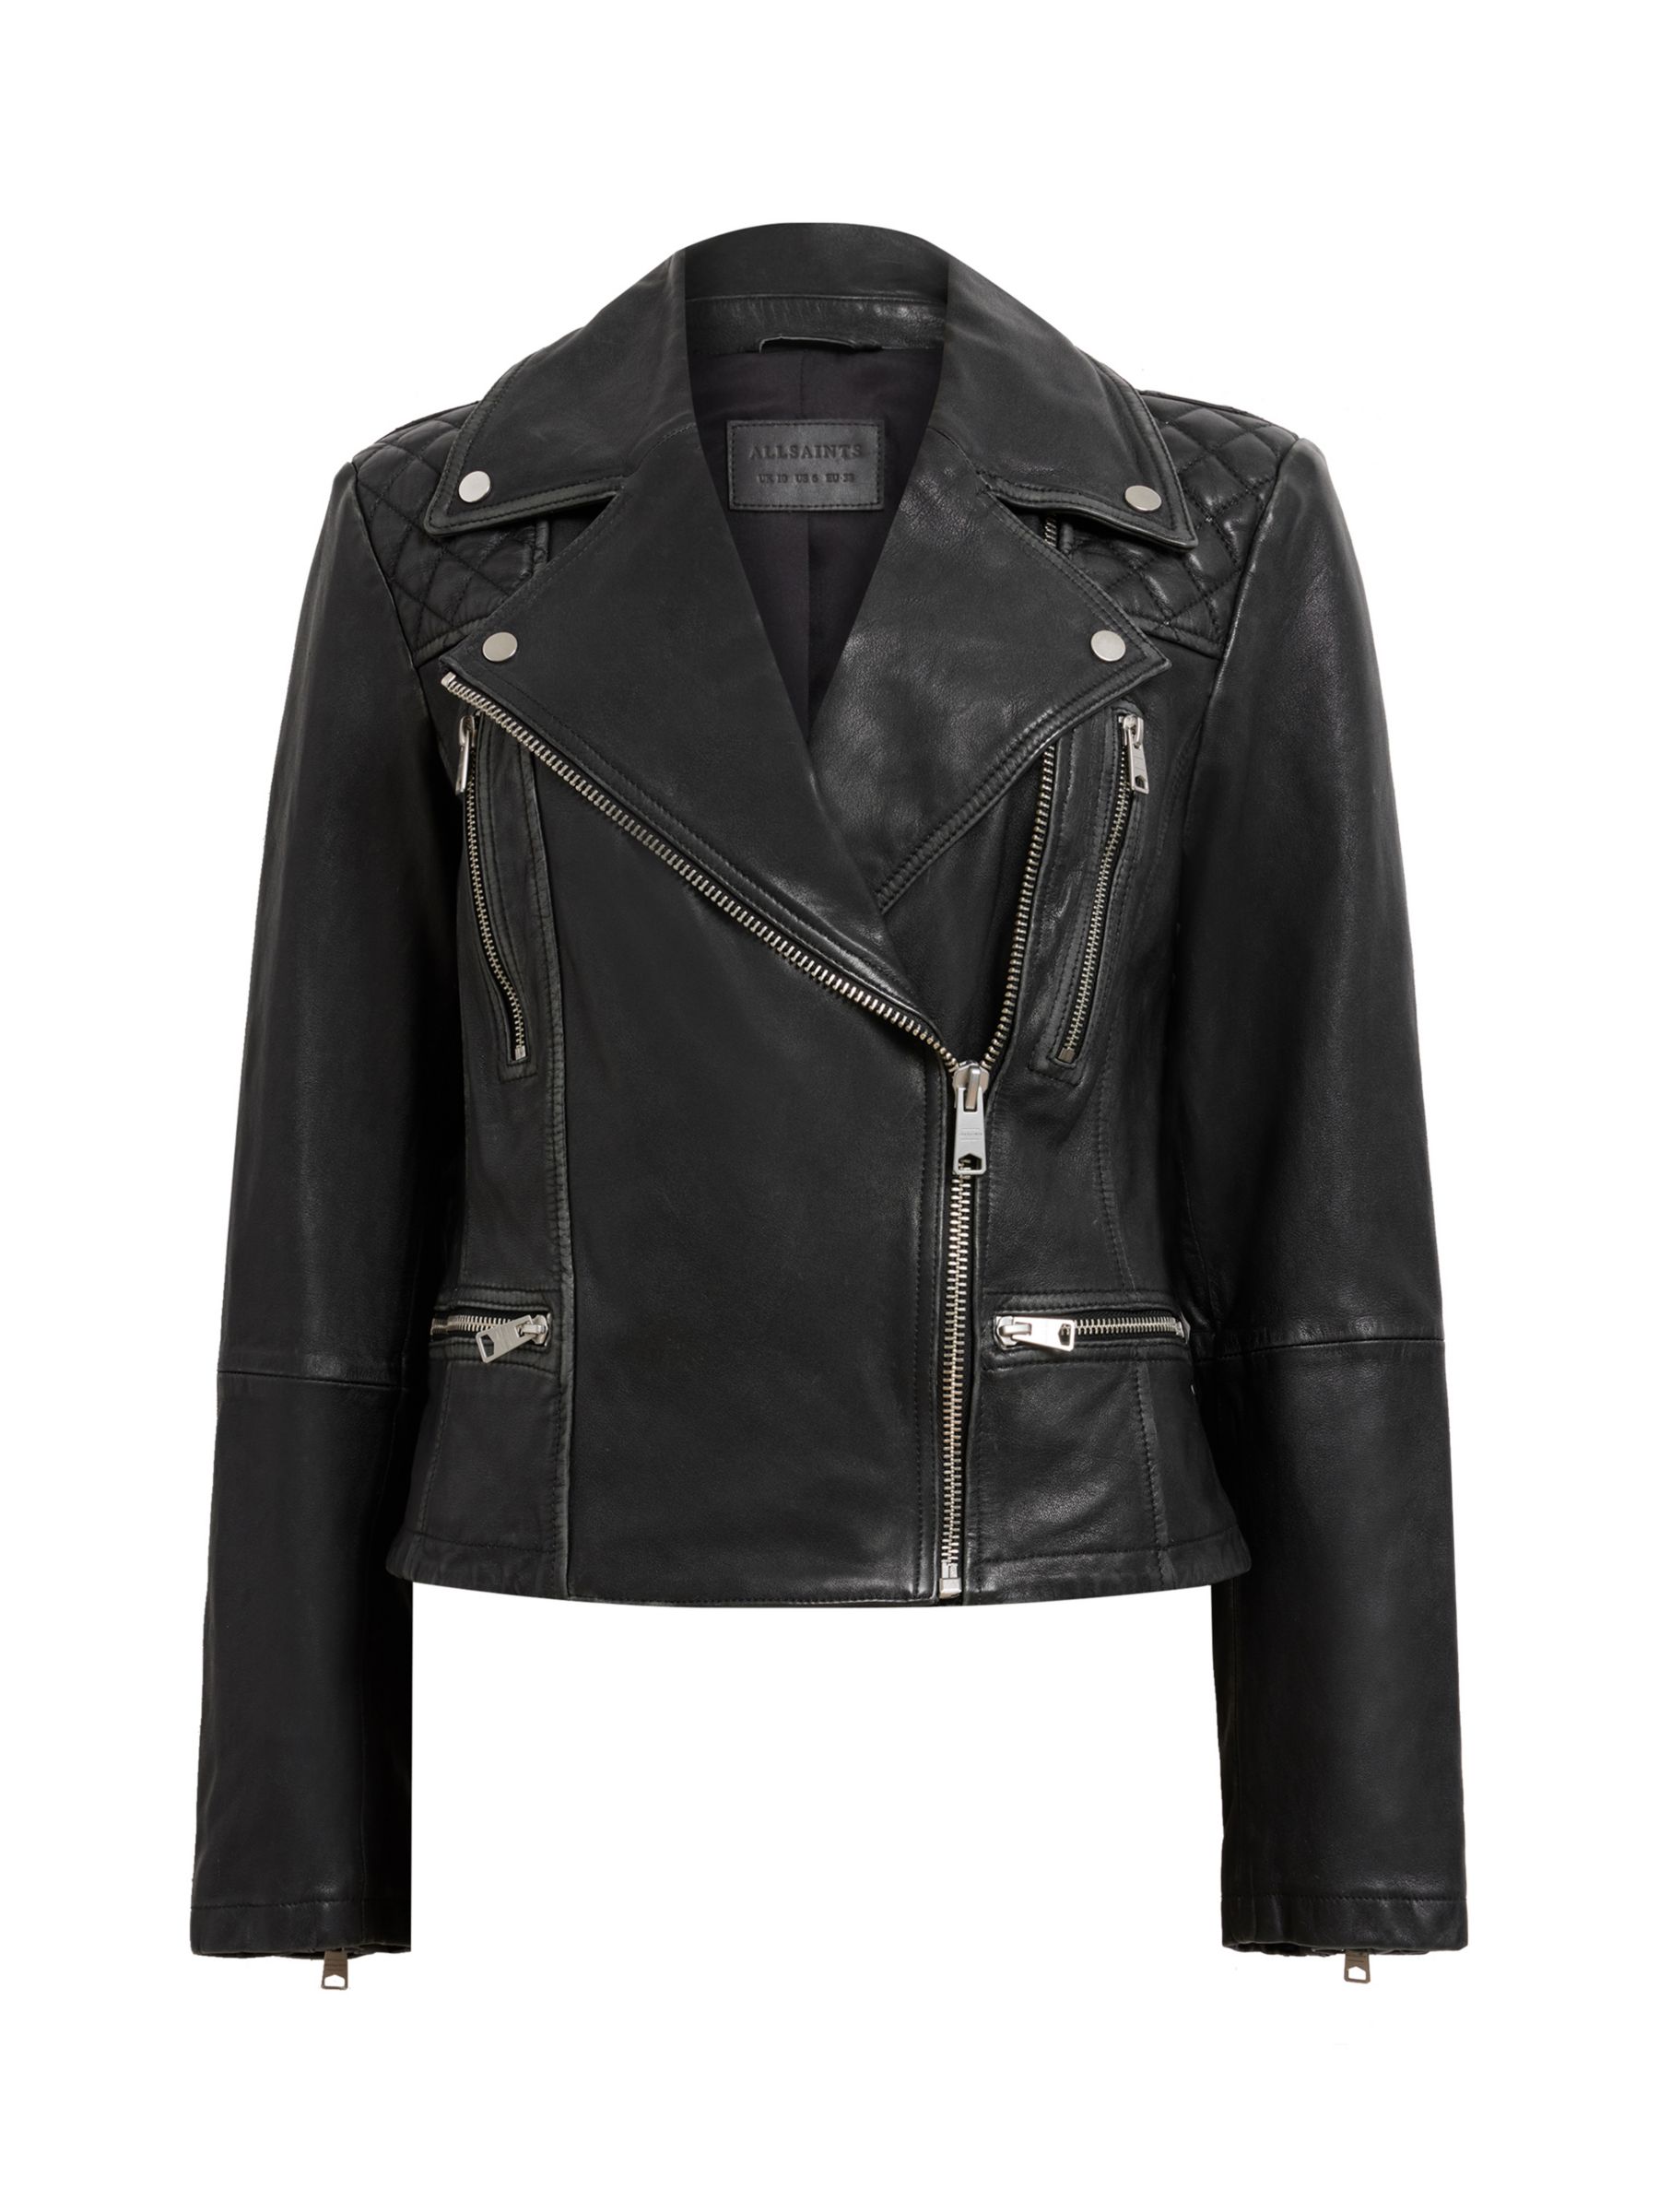 AllSaints Cargo Leather Biker Jacket, Black at John Lewis & Partners